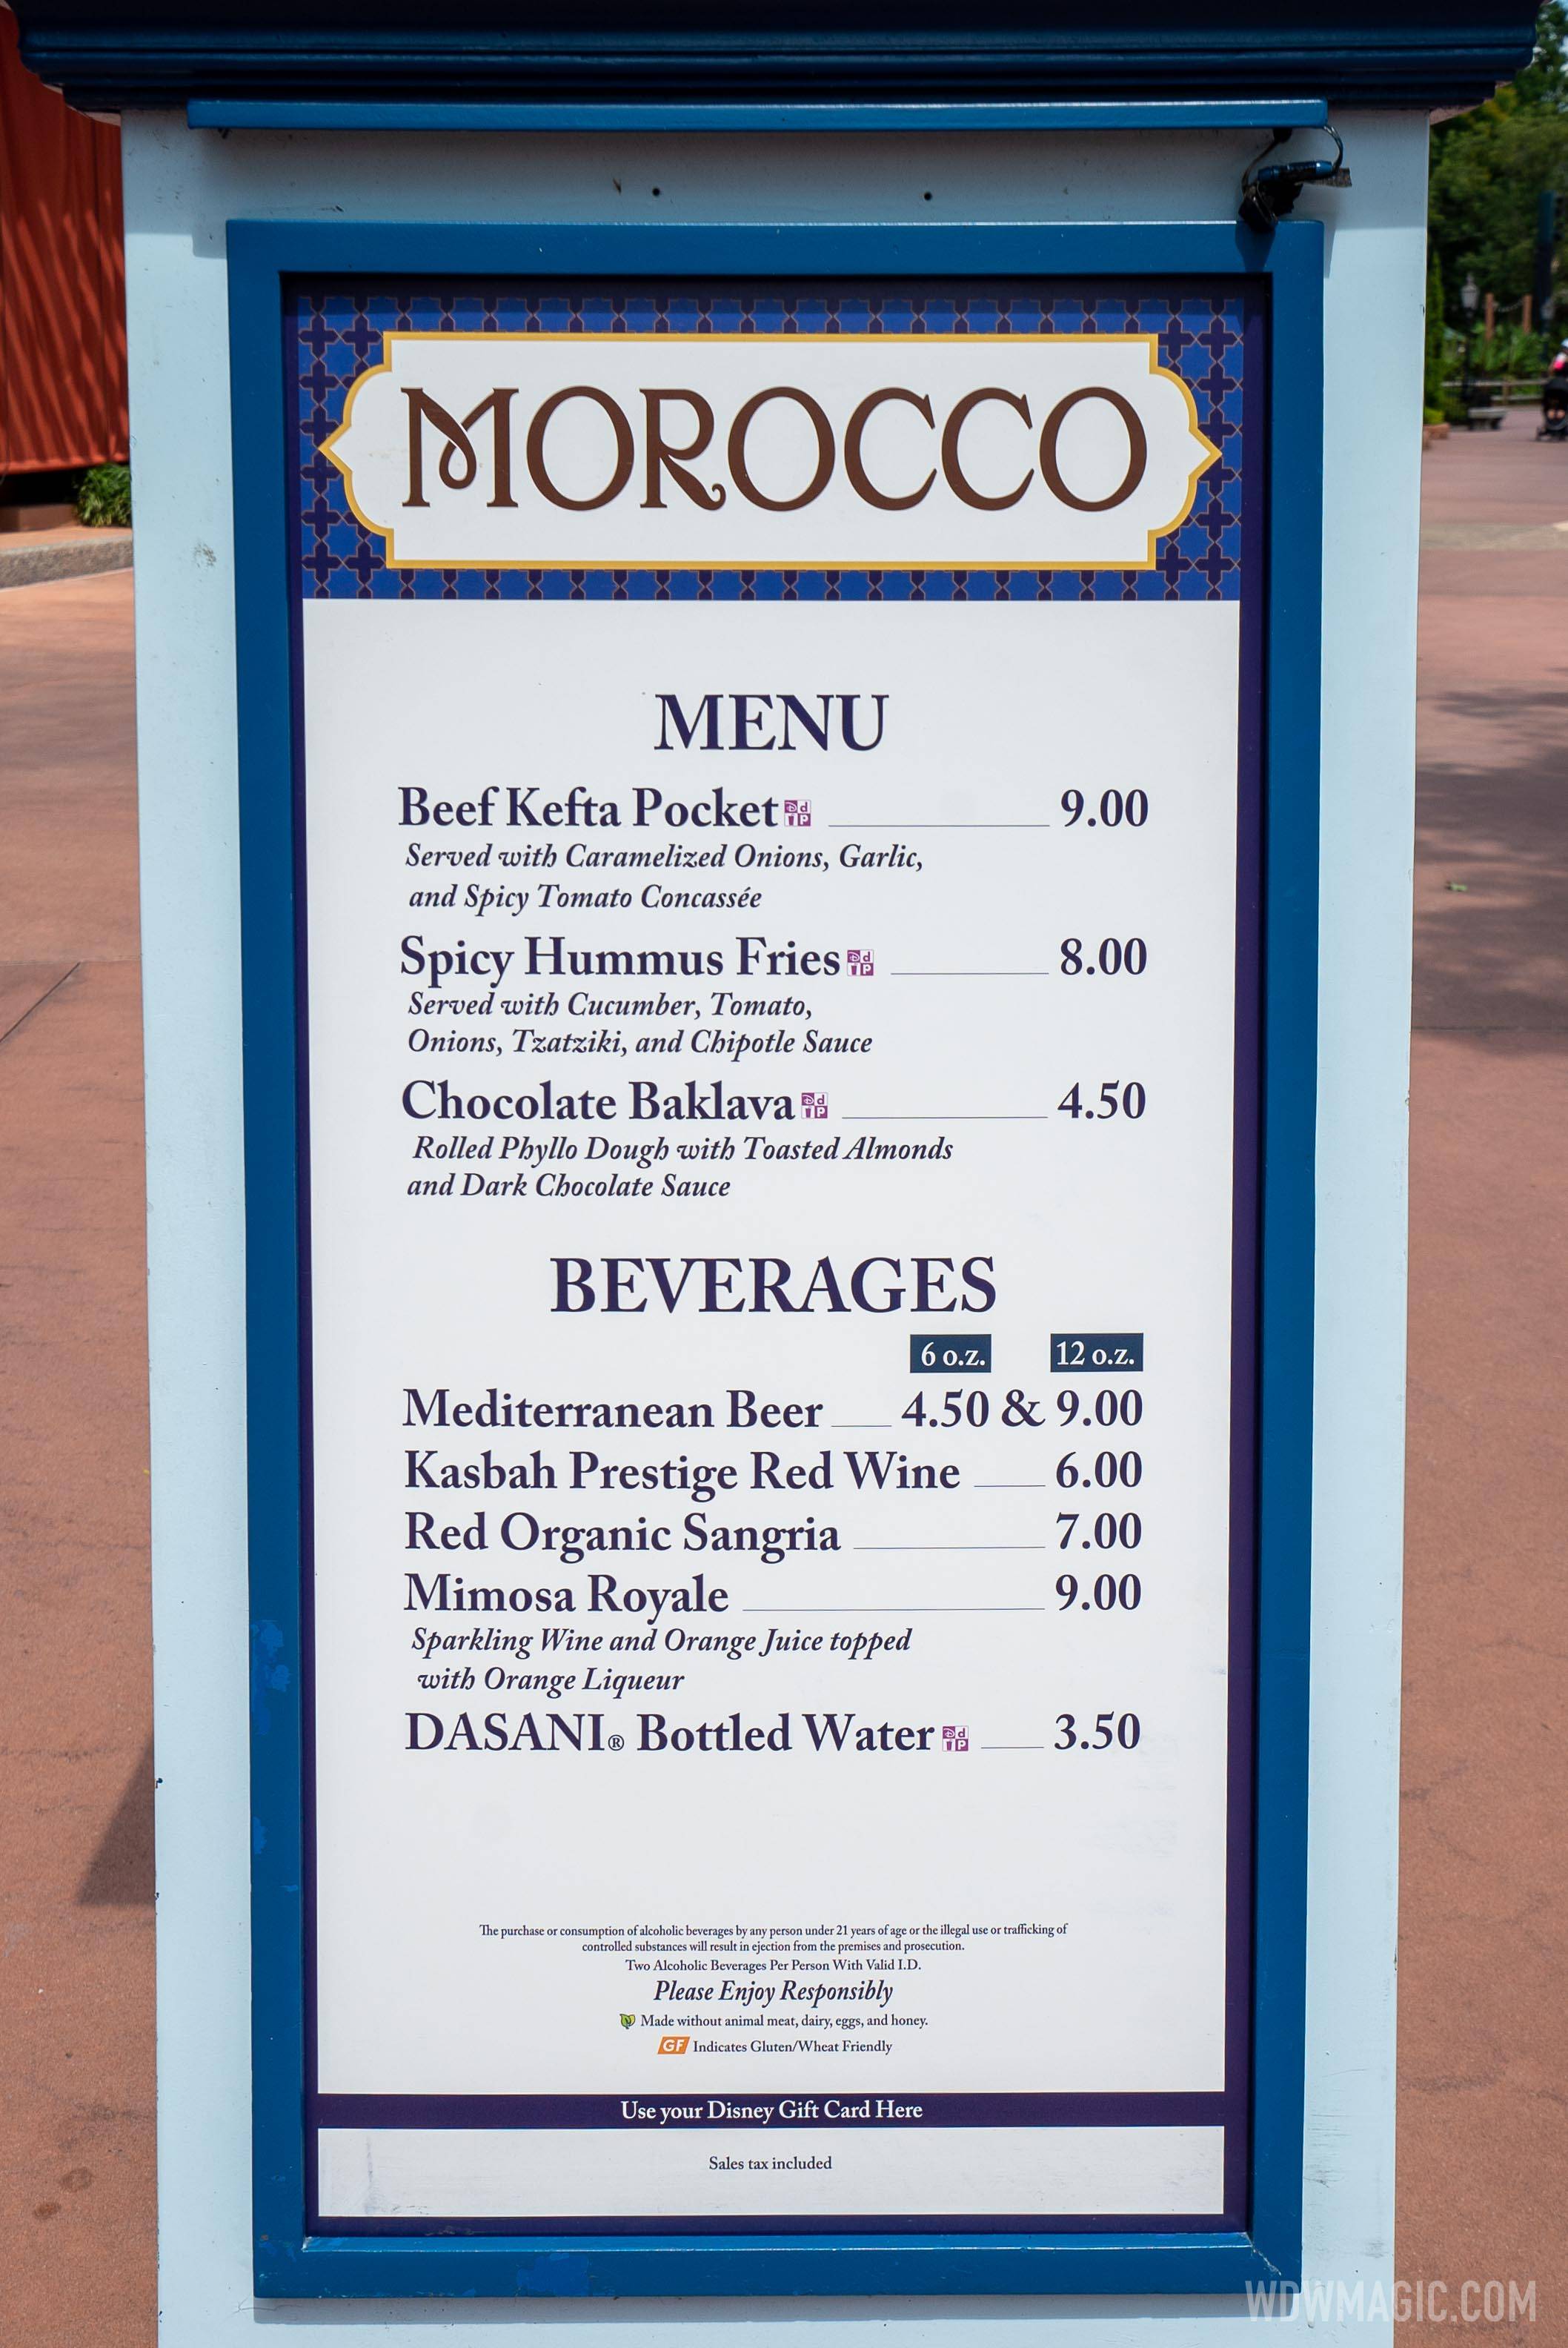 Taste of EPCOT Food and Wine Festival - Morocco menu